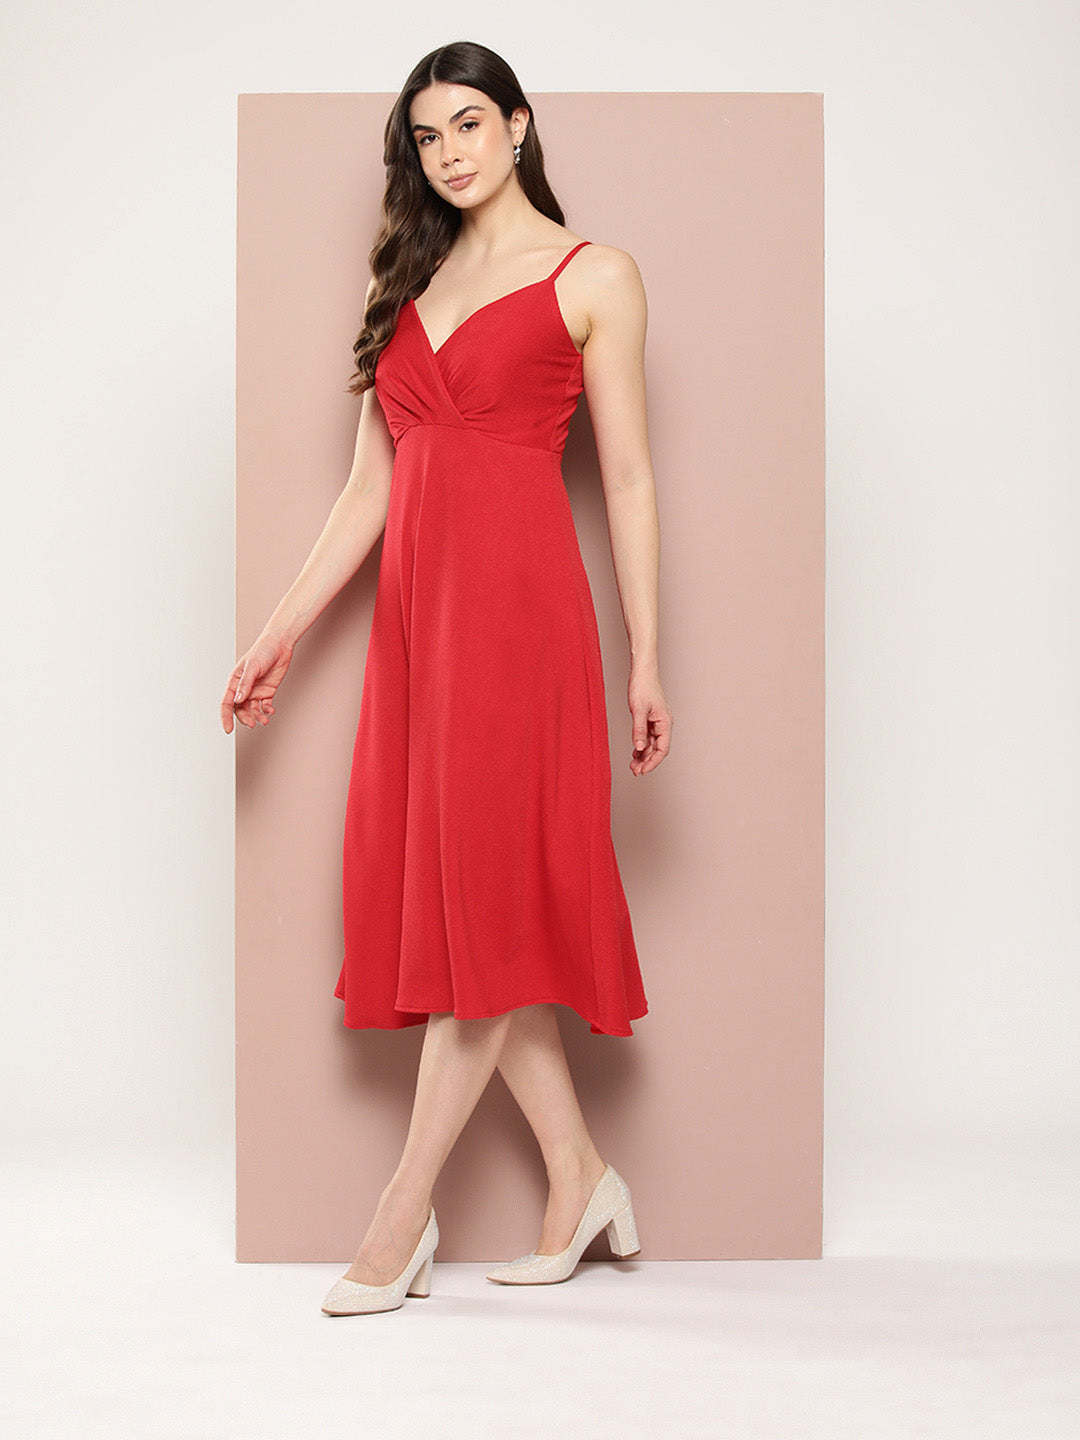 Stylish Red midi dress.